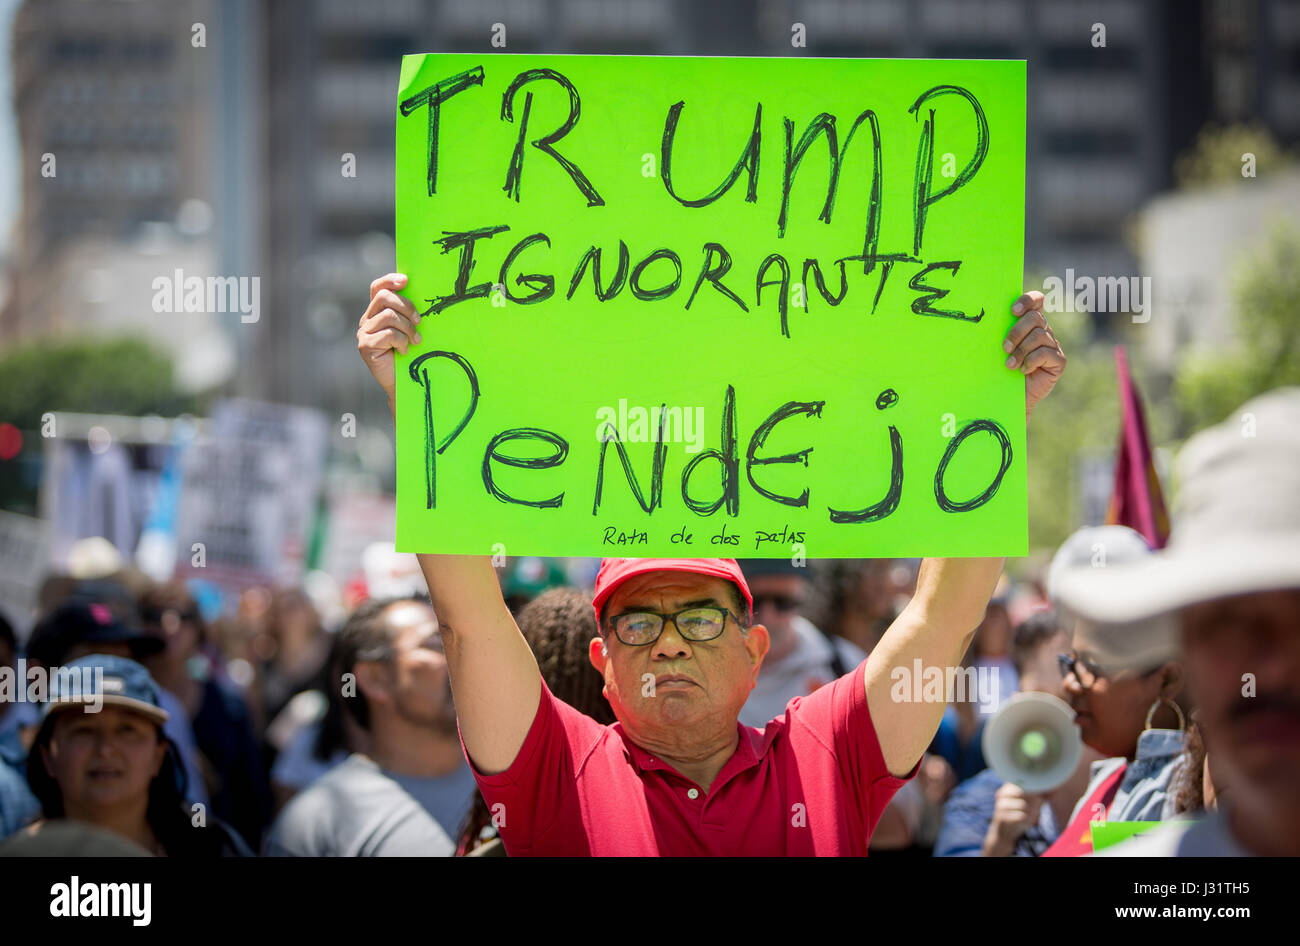 Los Angeles, USA. 1. Mai 2017. Anti-Trump Demonstrant bei kann Tag in Downtown Los Angeles, Kalifornien, 1. Mai 2017 Rallye. Schild "Trump Ignorante Pendejo." Bildnachweis: Jim Newberry/Alamy Live-Nachrichten Stockfoto